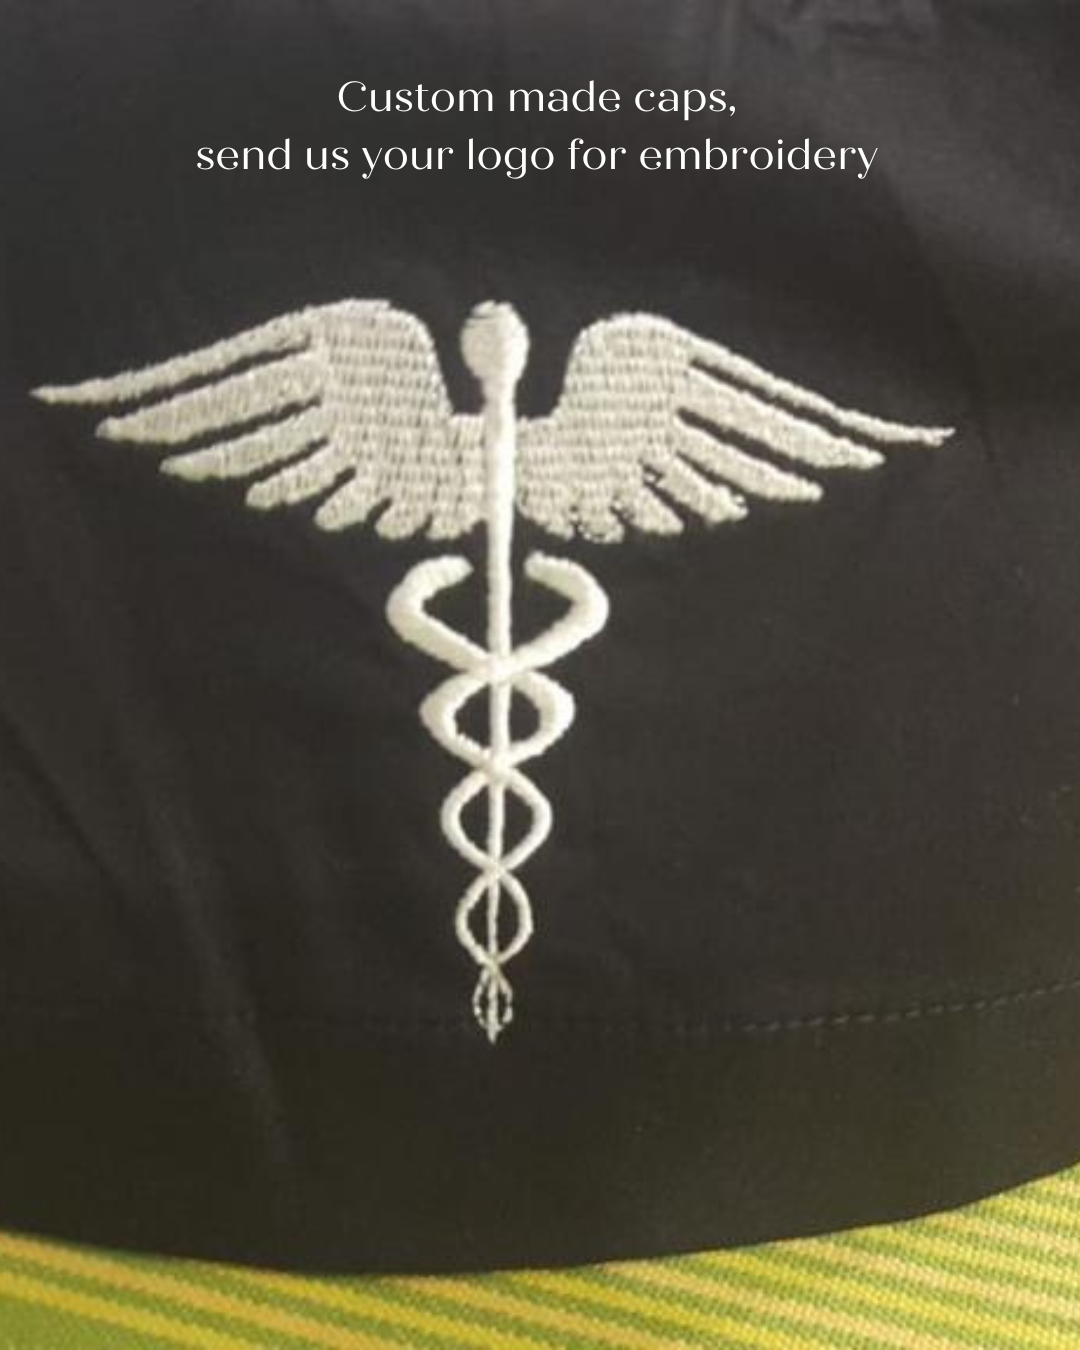 Personalised Scrub Caps For Medical Professionals